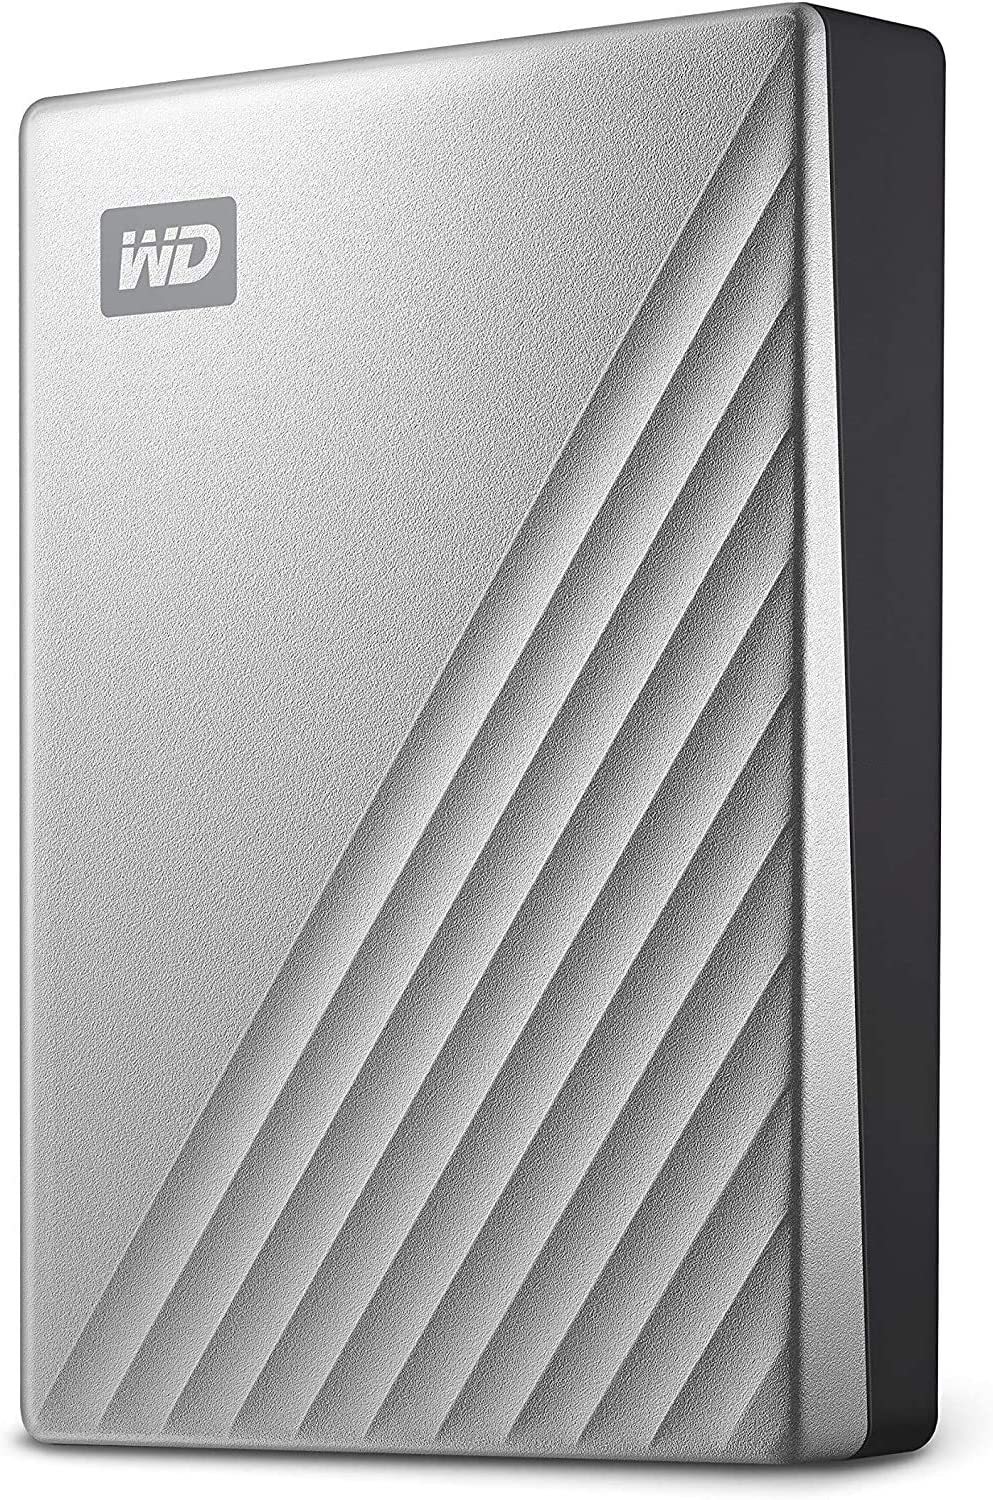 wd 4tb my passport for mac usb 3.0 portable hard drive